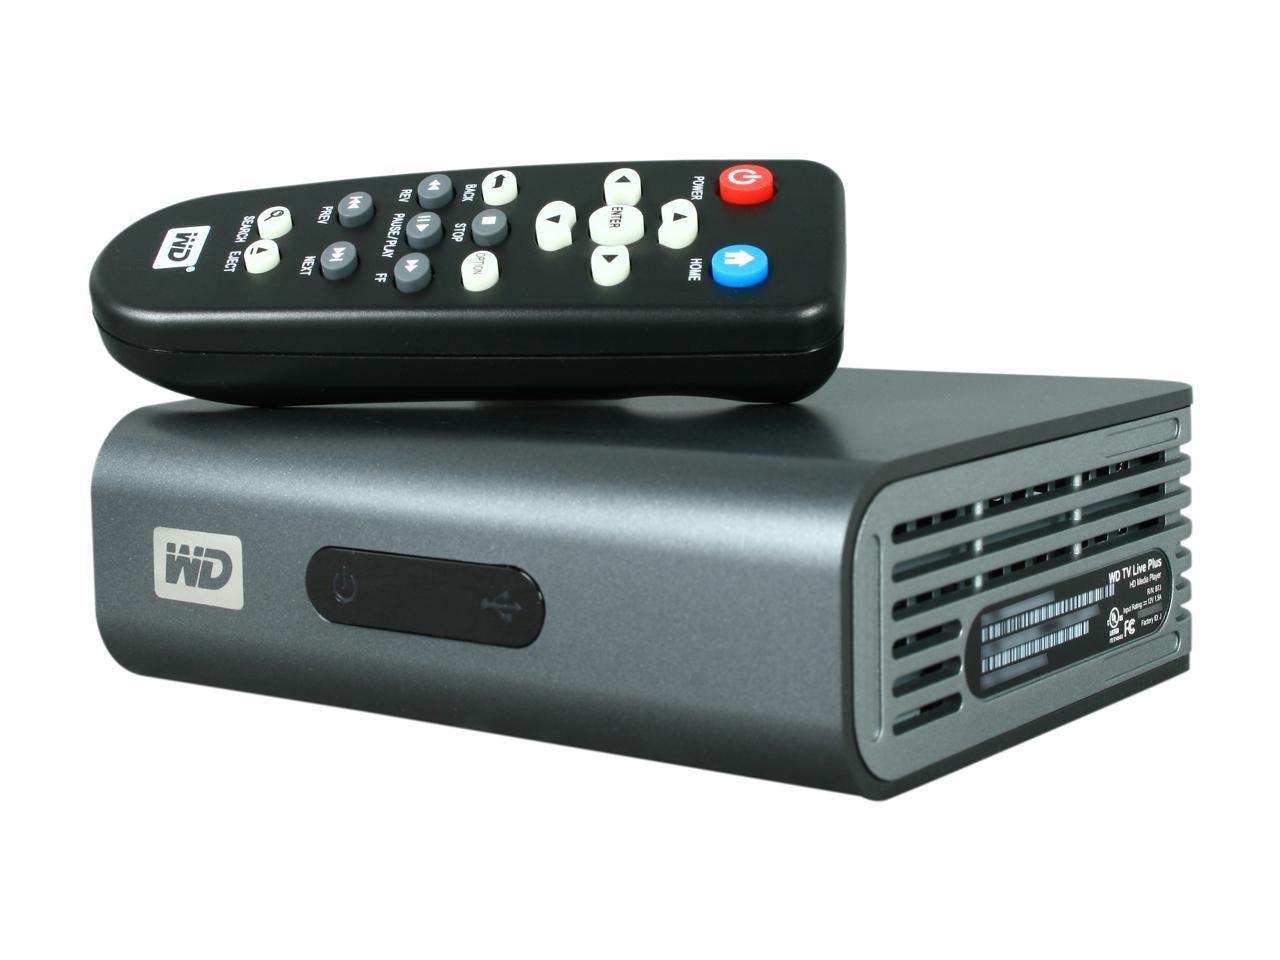 HDMI, WiFi, MPEG1/2/4, USB WD TV Live Media Player 